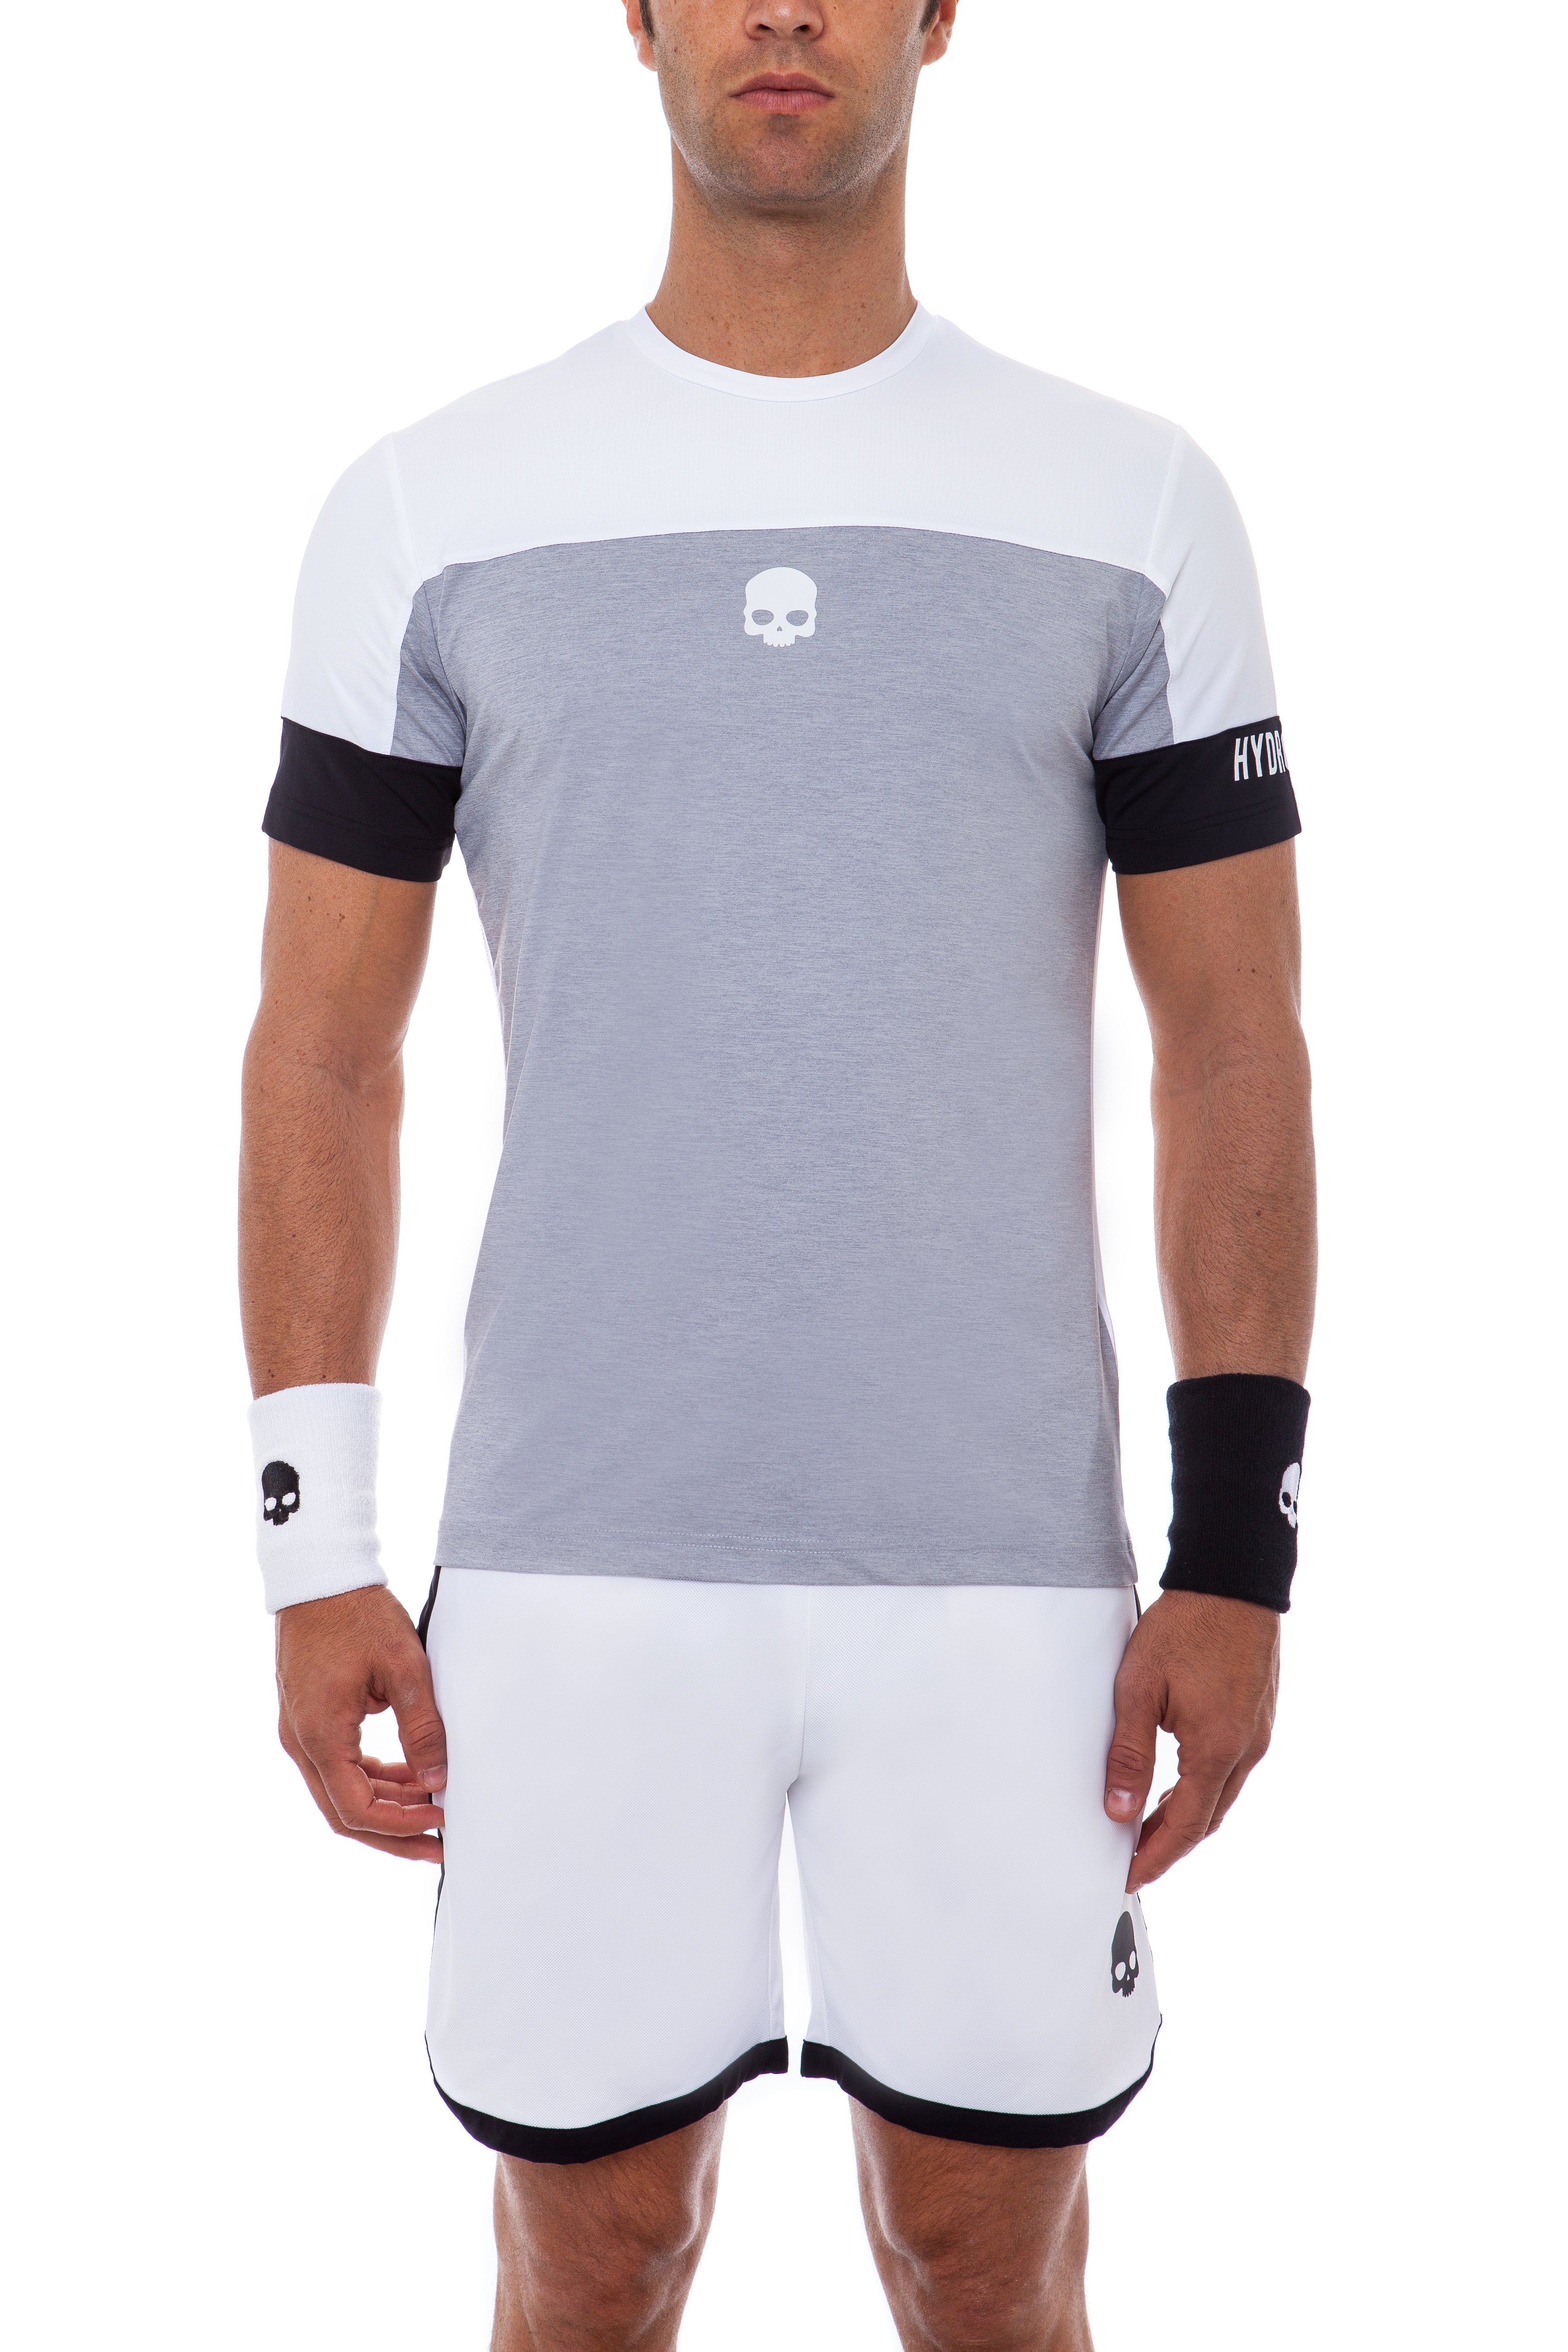 Tech T-Shirt - Hydrogen Tennis Clothing